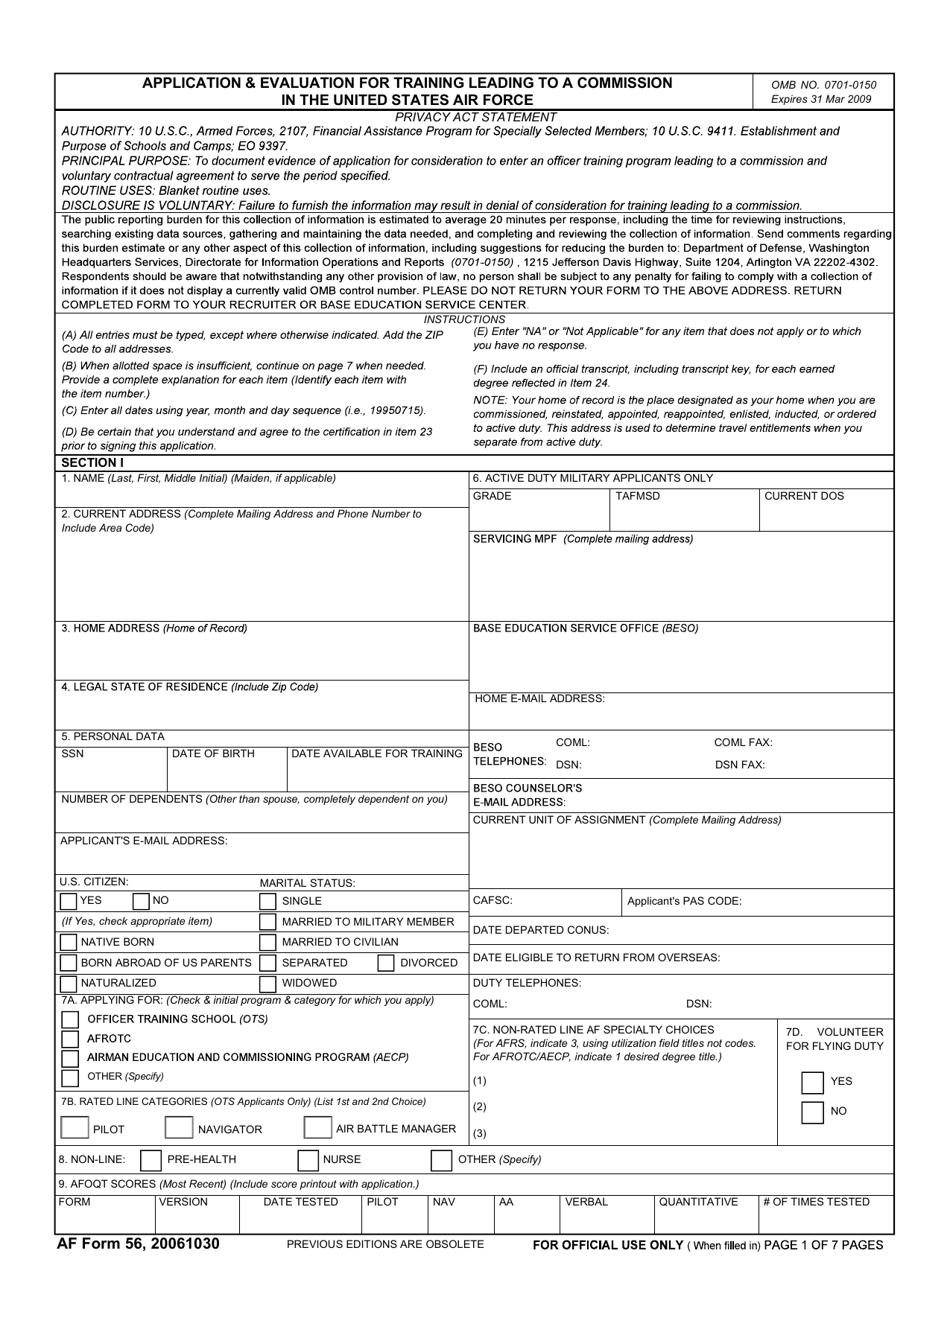 af-form-56-fill-out-sign-online-and-download-fillable-pdf